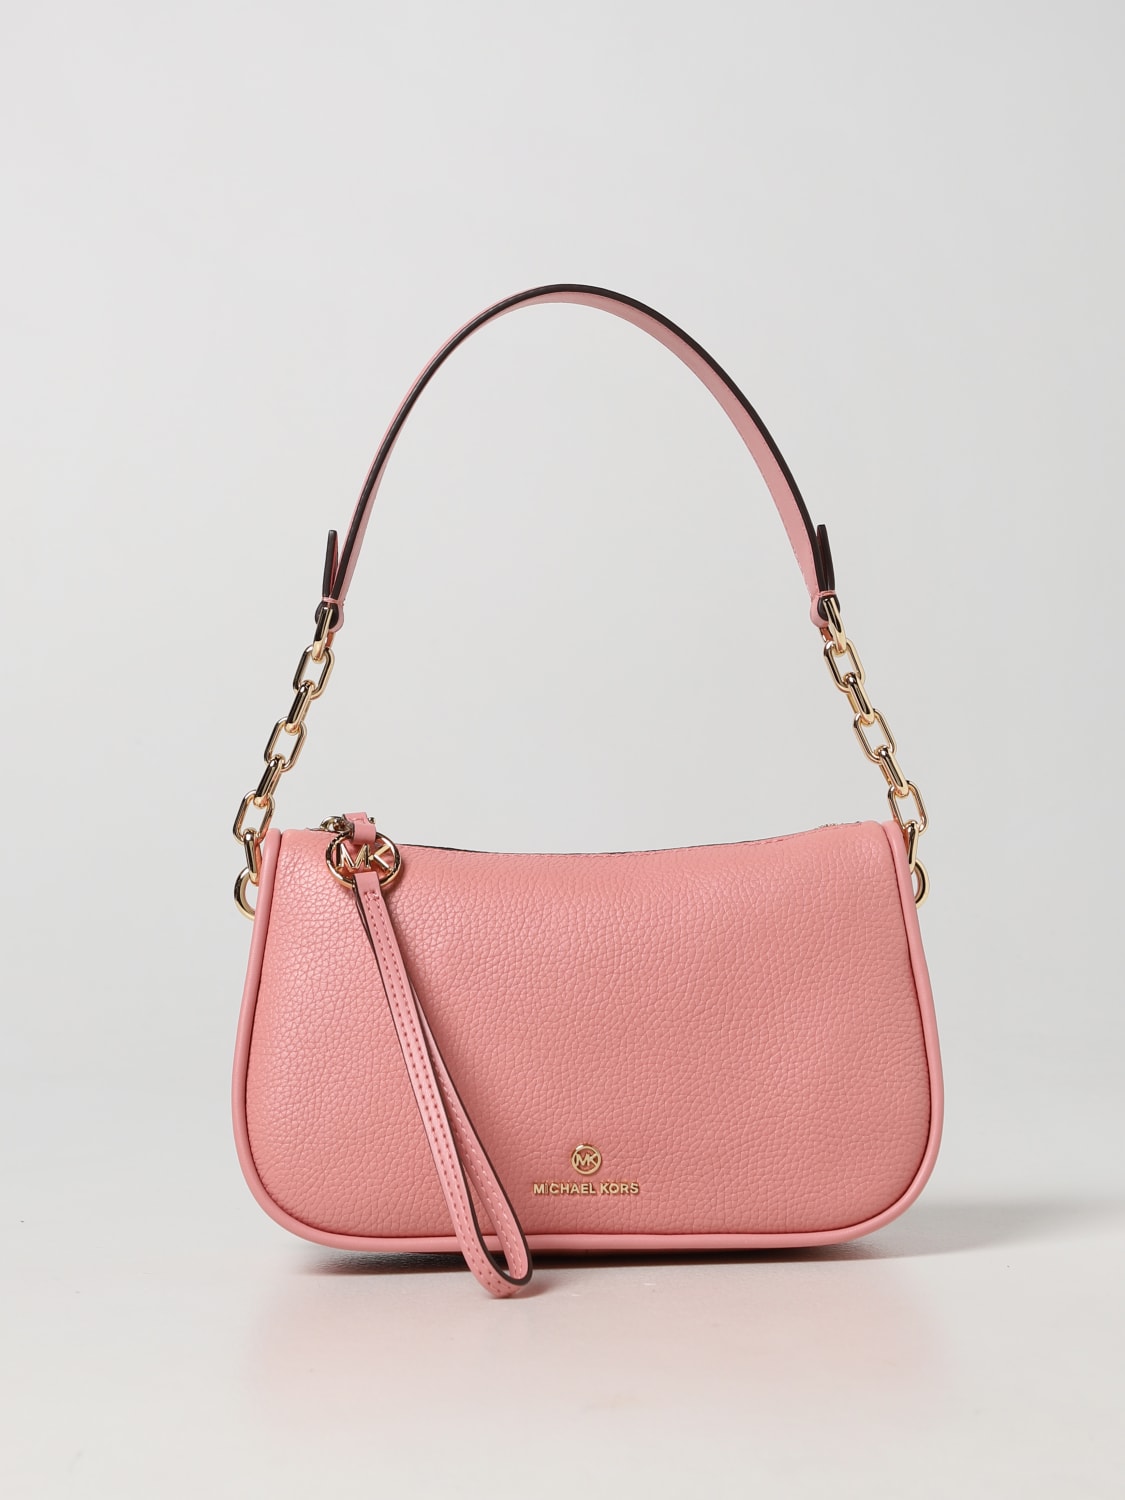 Michael kors sling bag pink